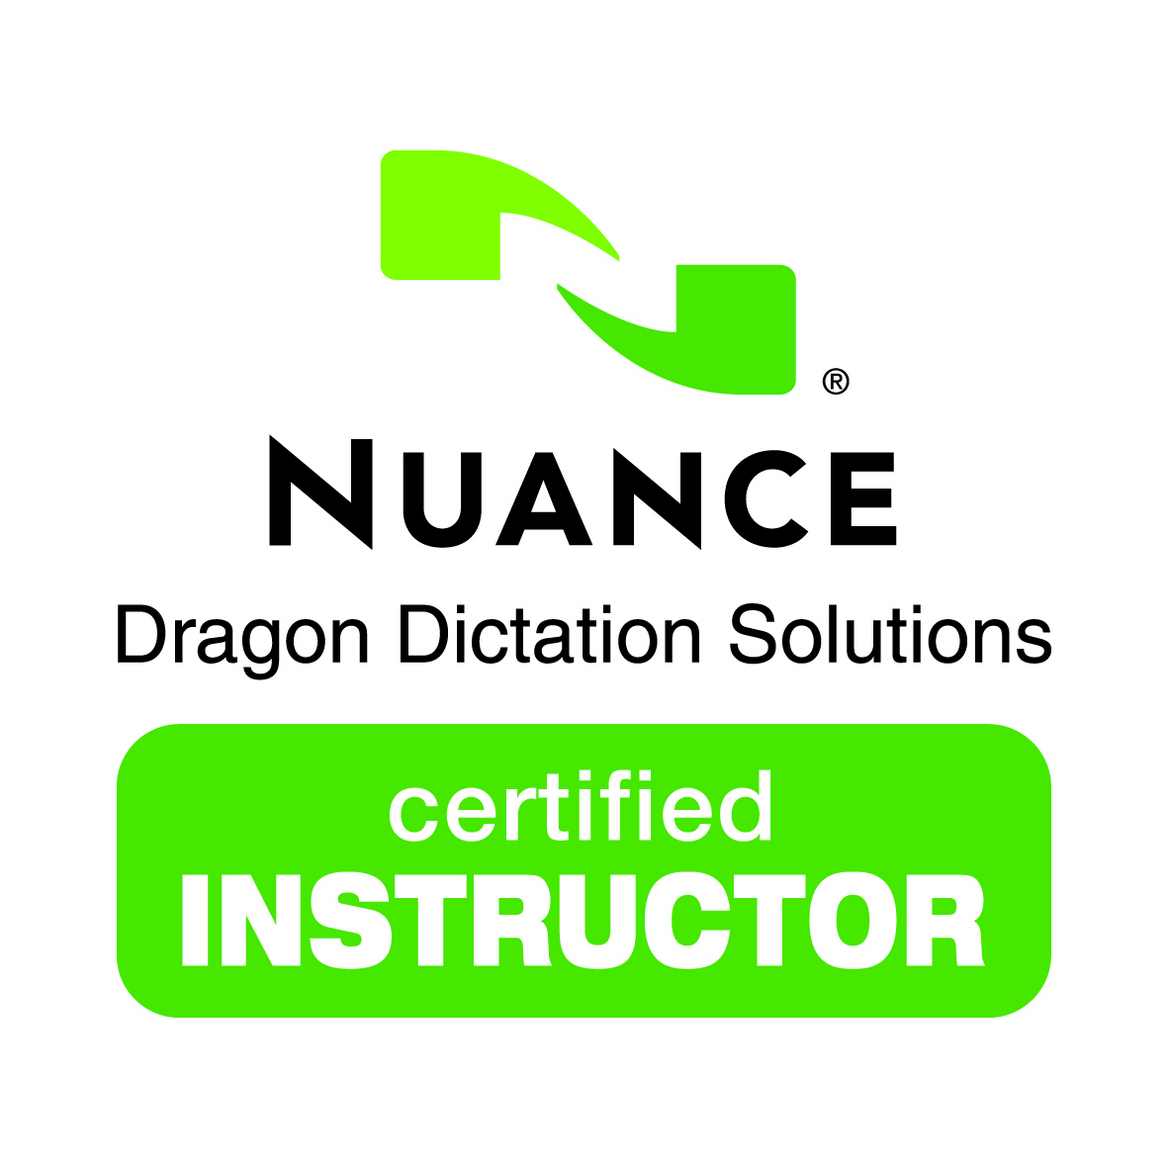 Nuance certified instructor Logo